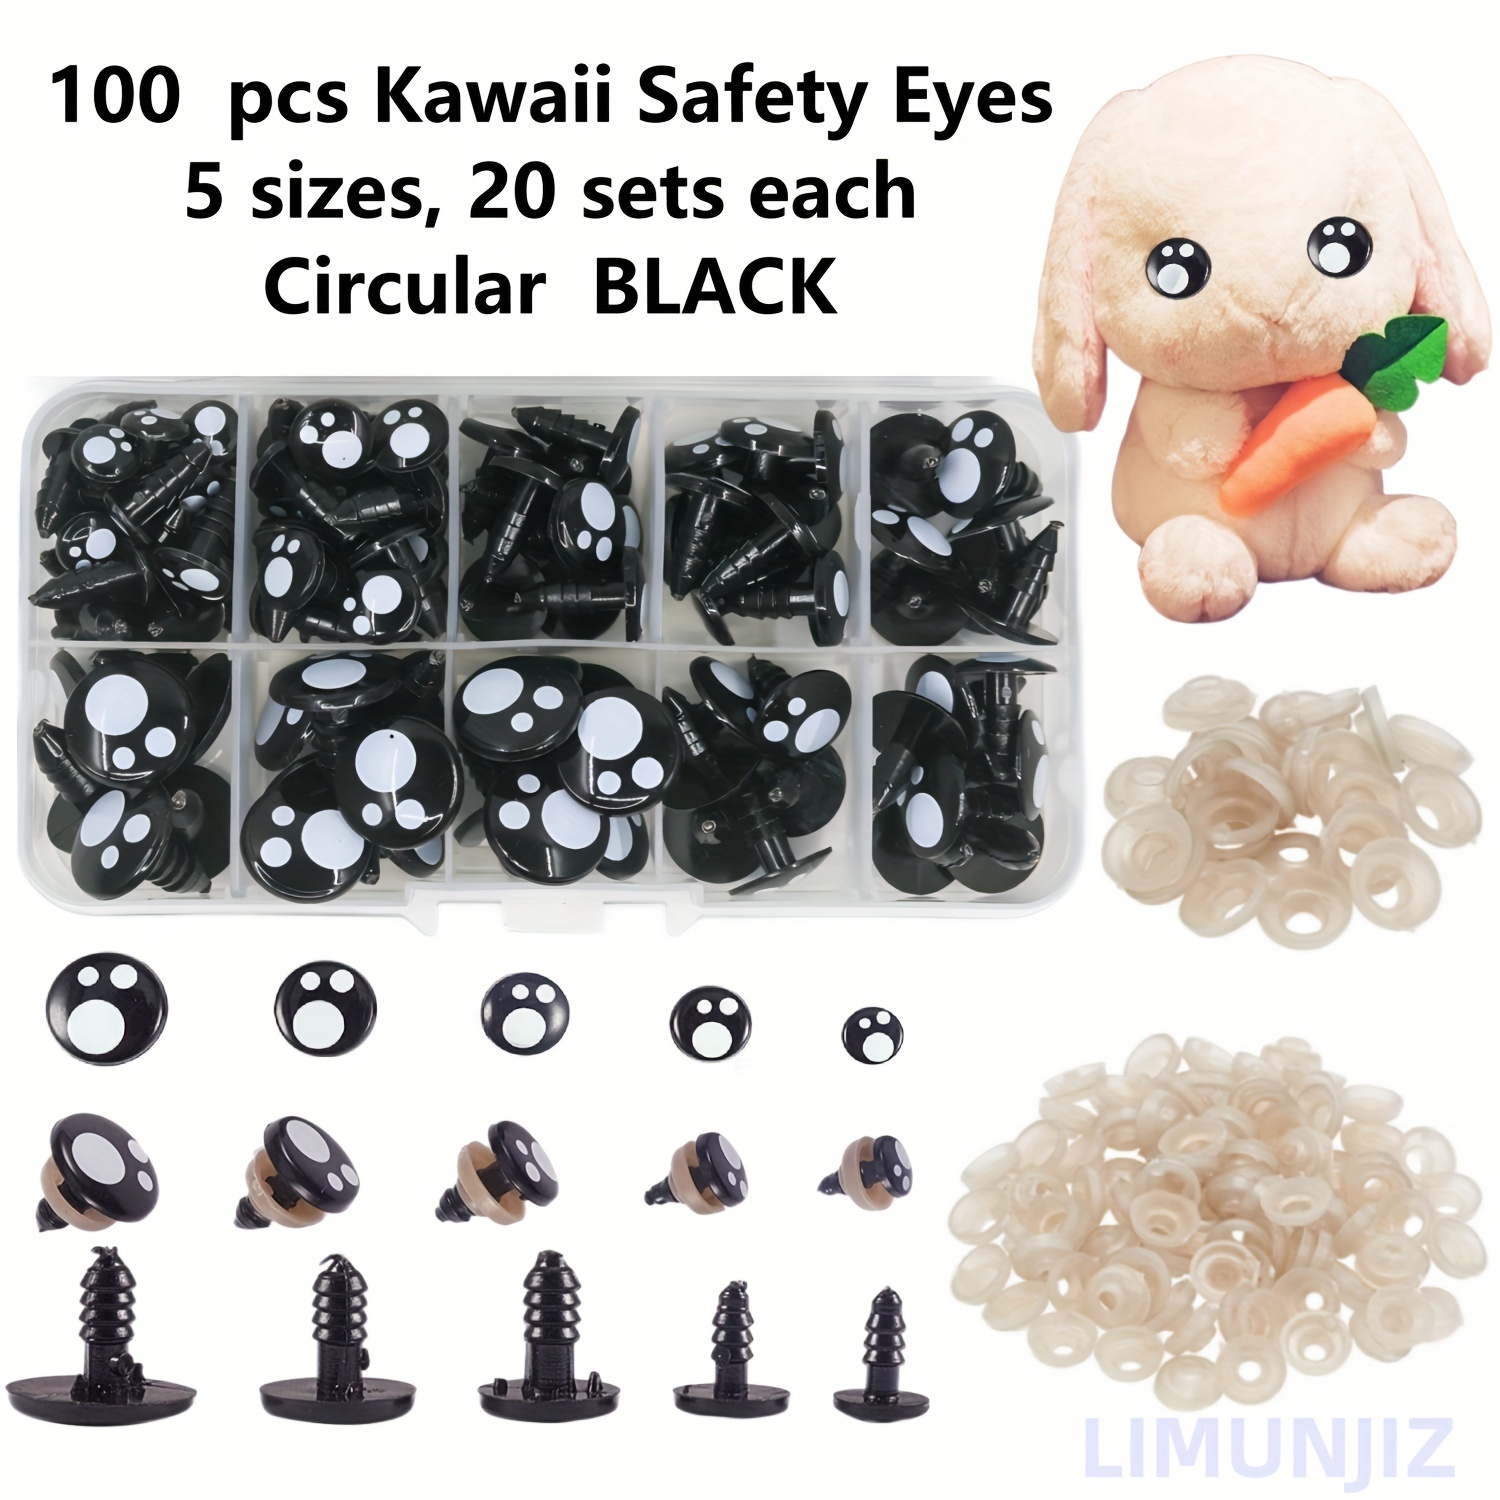 20pcs 12-30mm 3D Mixed Color Safety Toy eyes +Eyelash for amigurumi crochet  stuffed animal